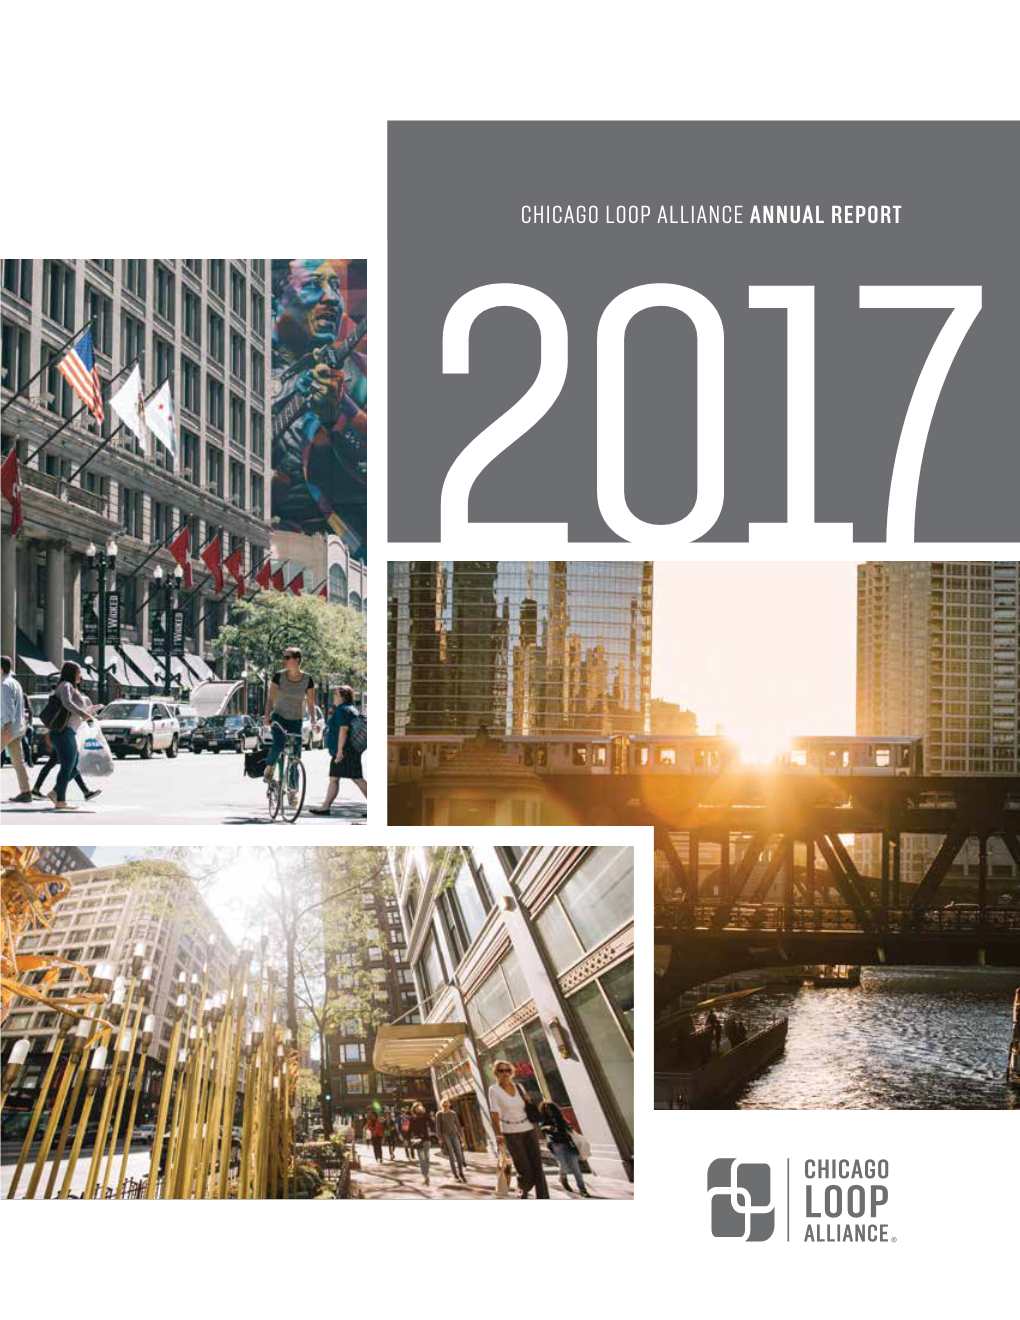 Chicago Loop Alliance Annual Report 2017 Annual Report 3 8 6 4 12 18 10 22 20